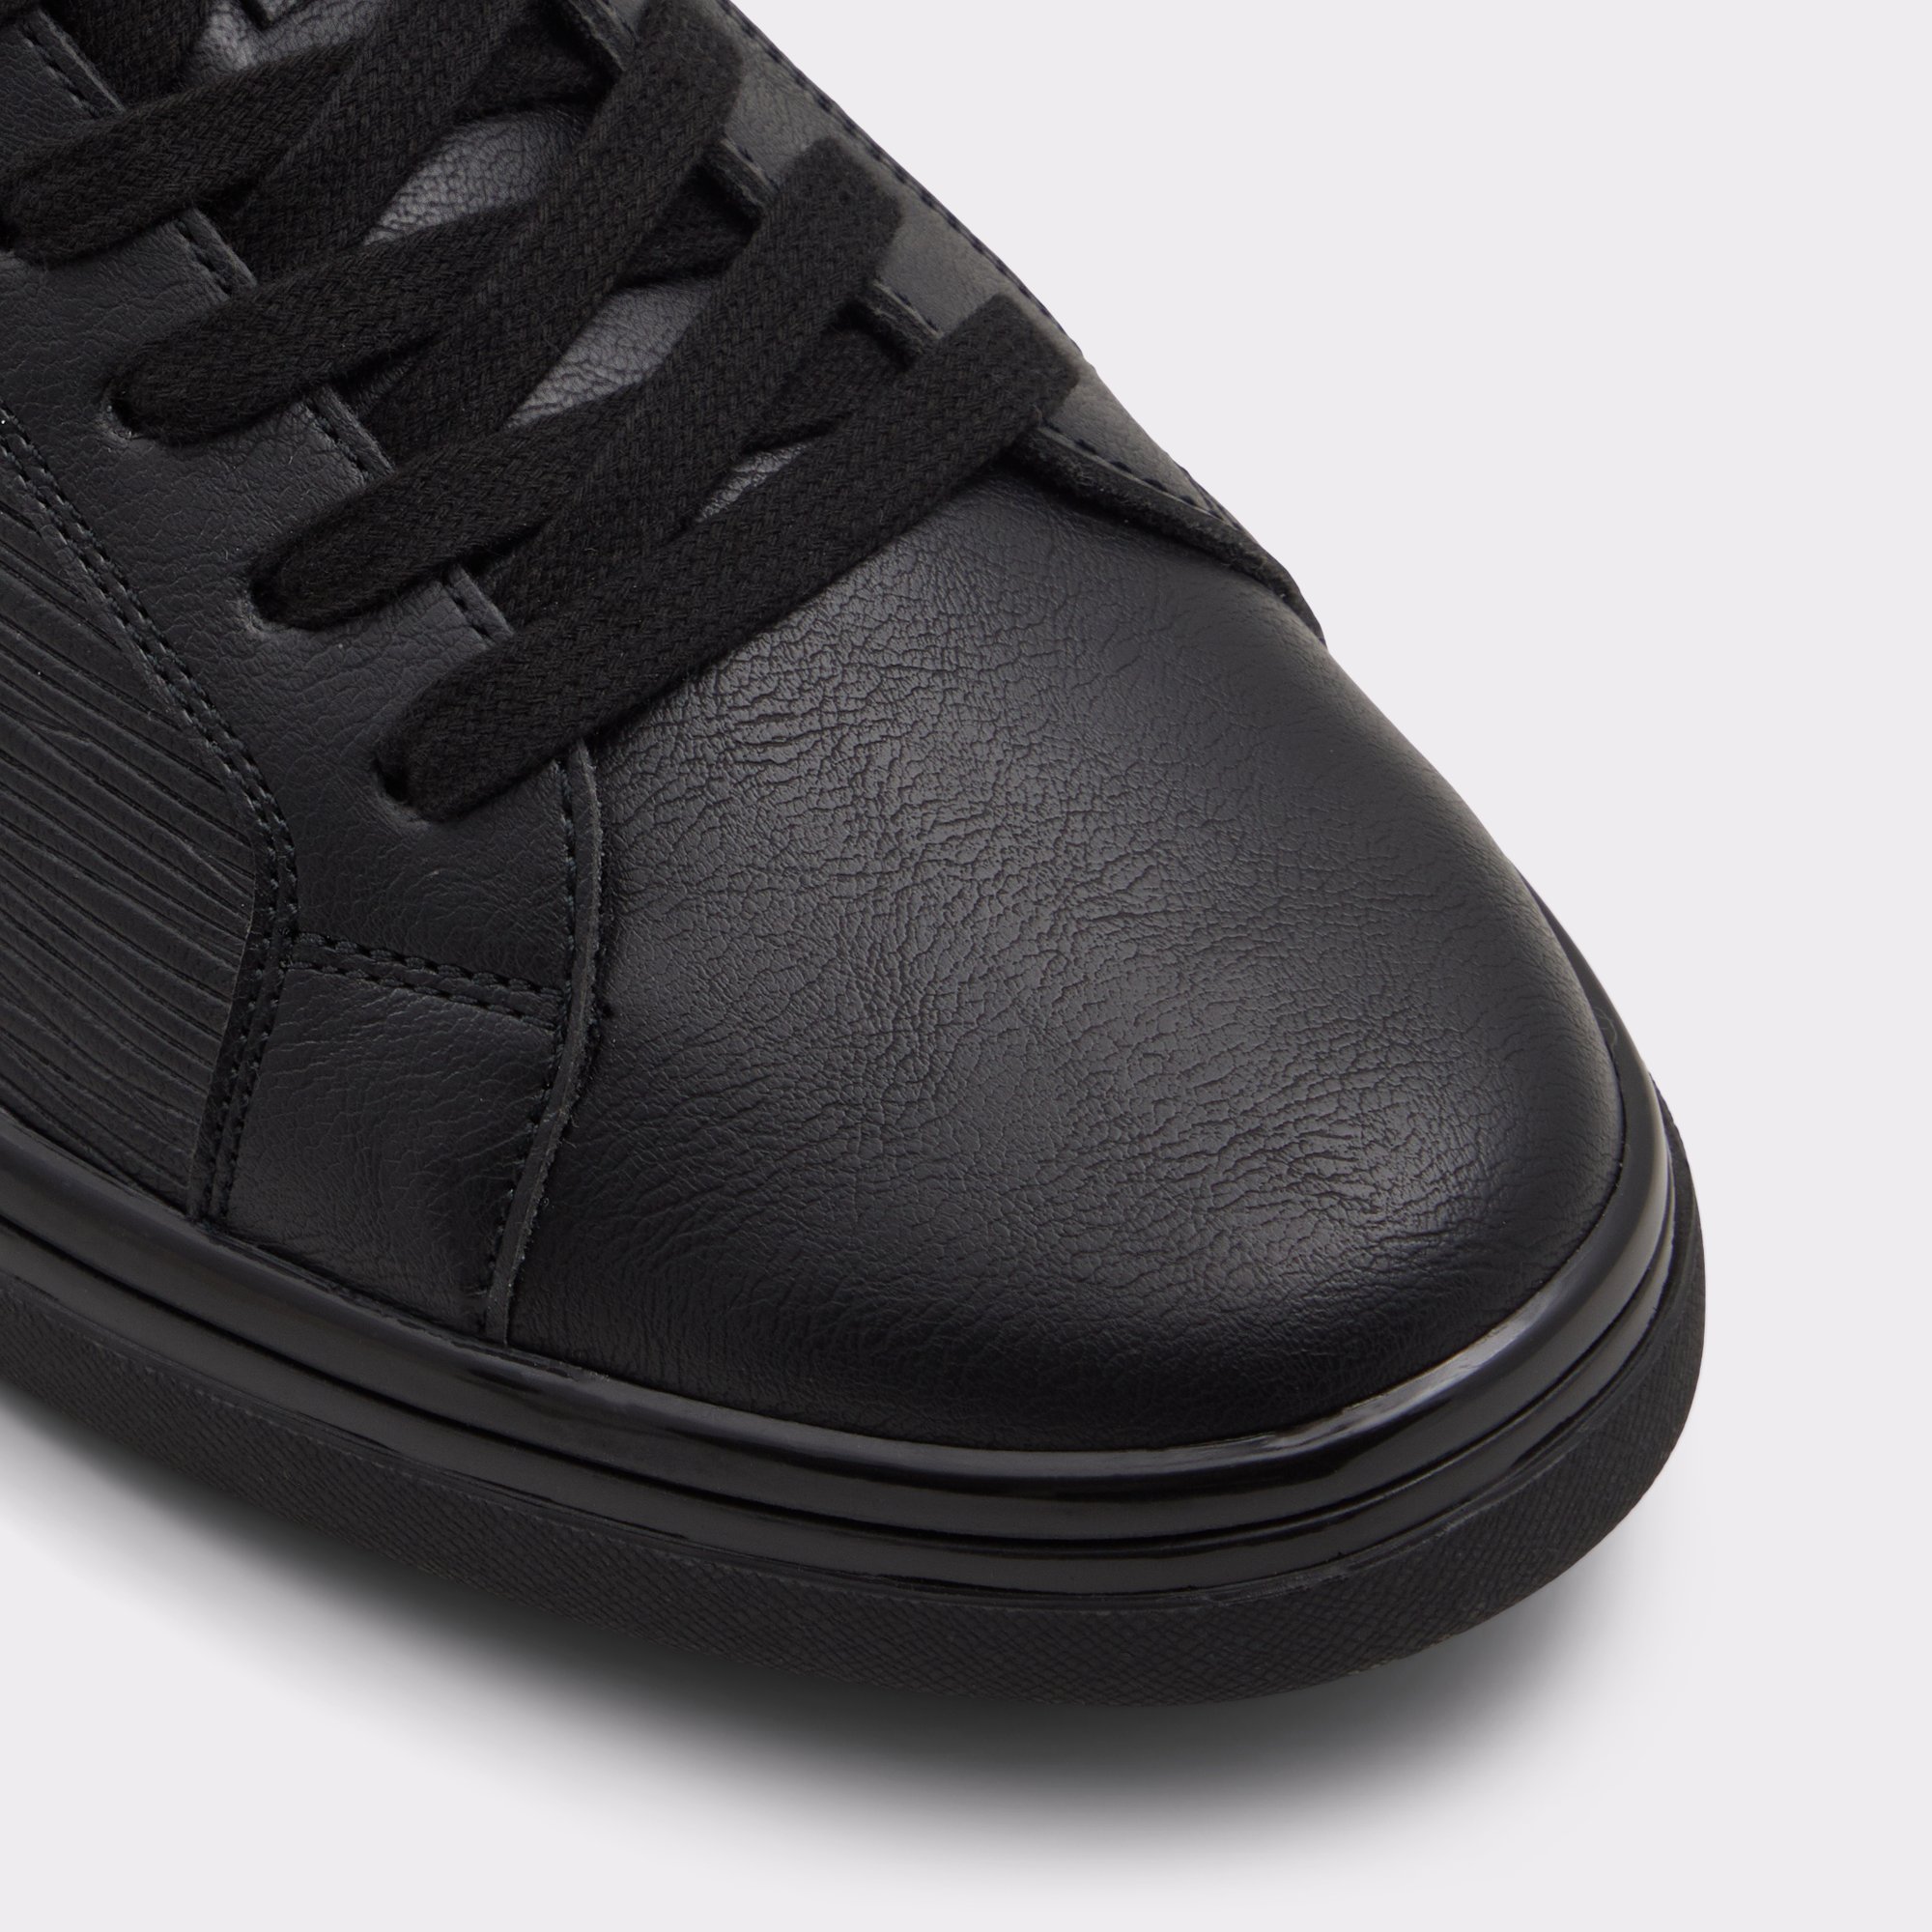 Pele Black Synthetic Embossed Men's Sneakers | ALDO US